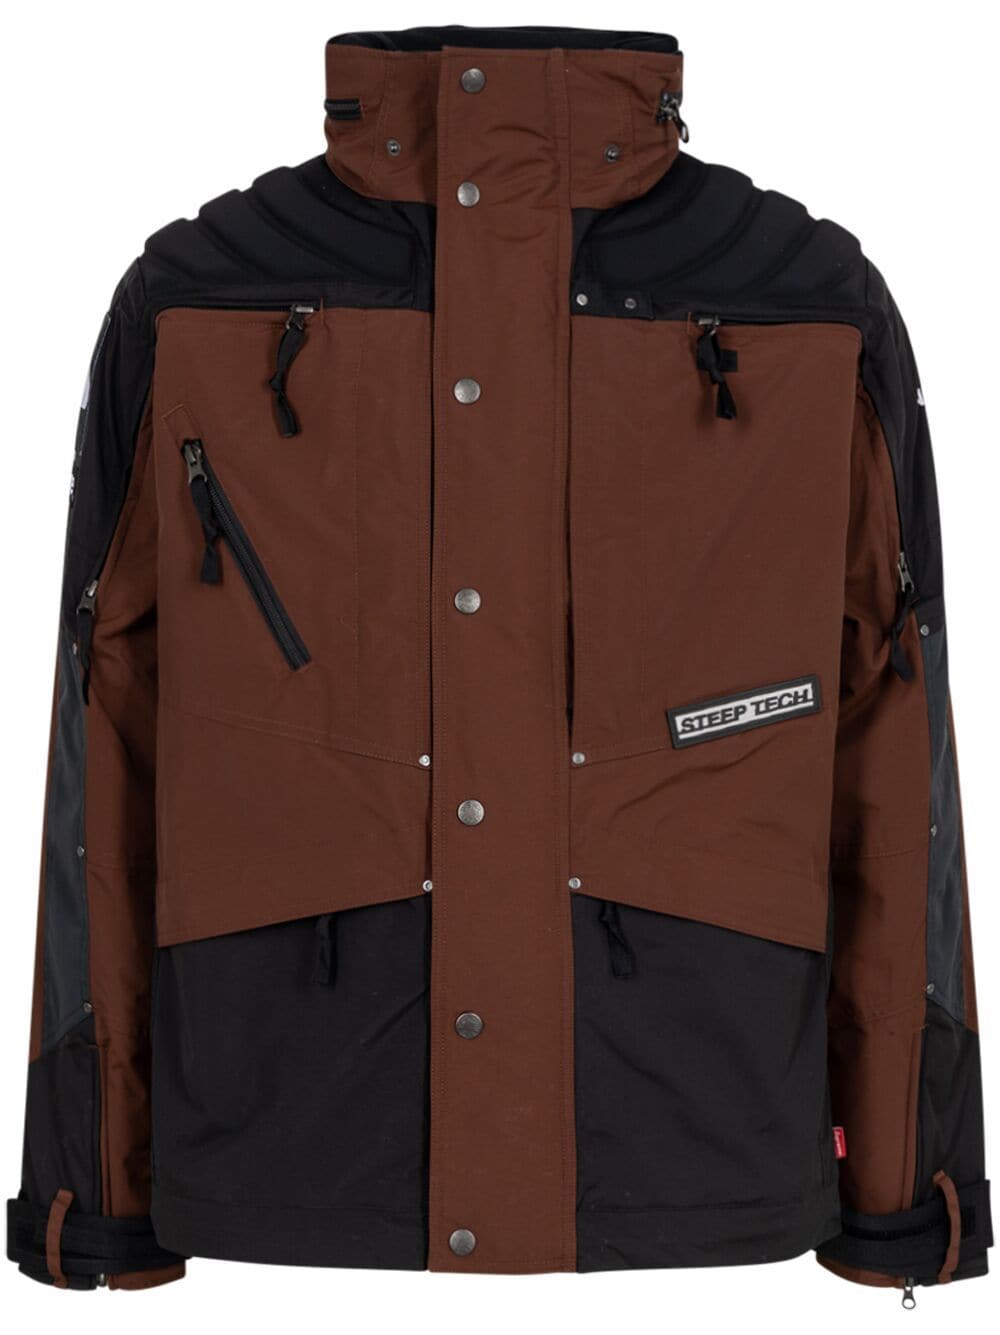 Supreme x The North Face Steep Tech Apogee jacket - Brown von Supreme